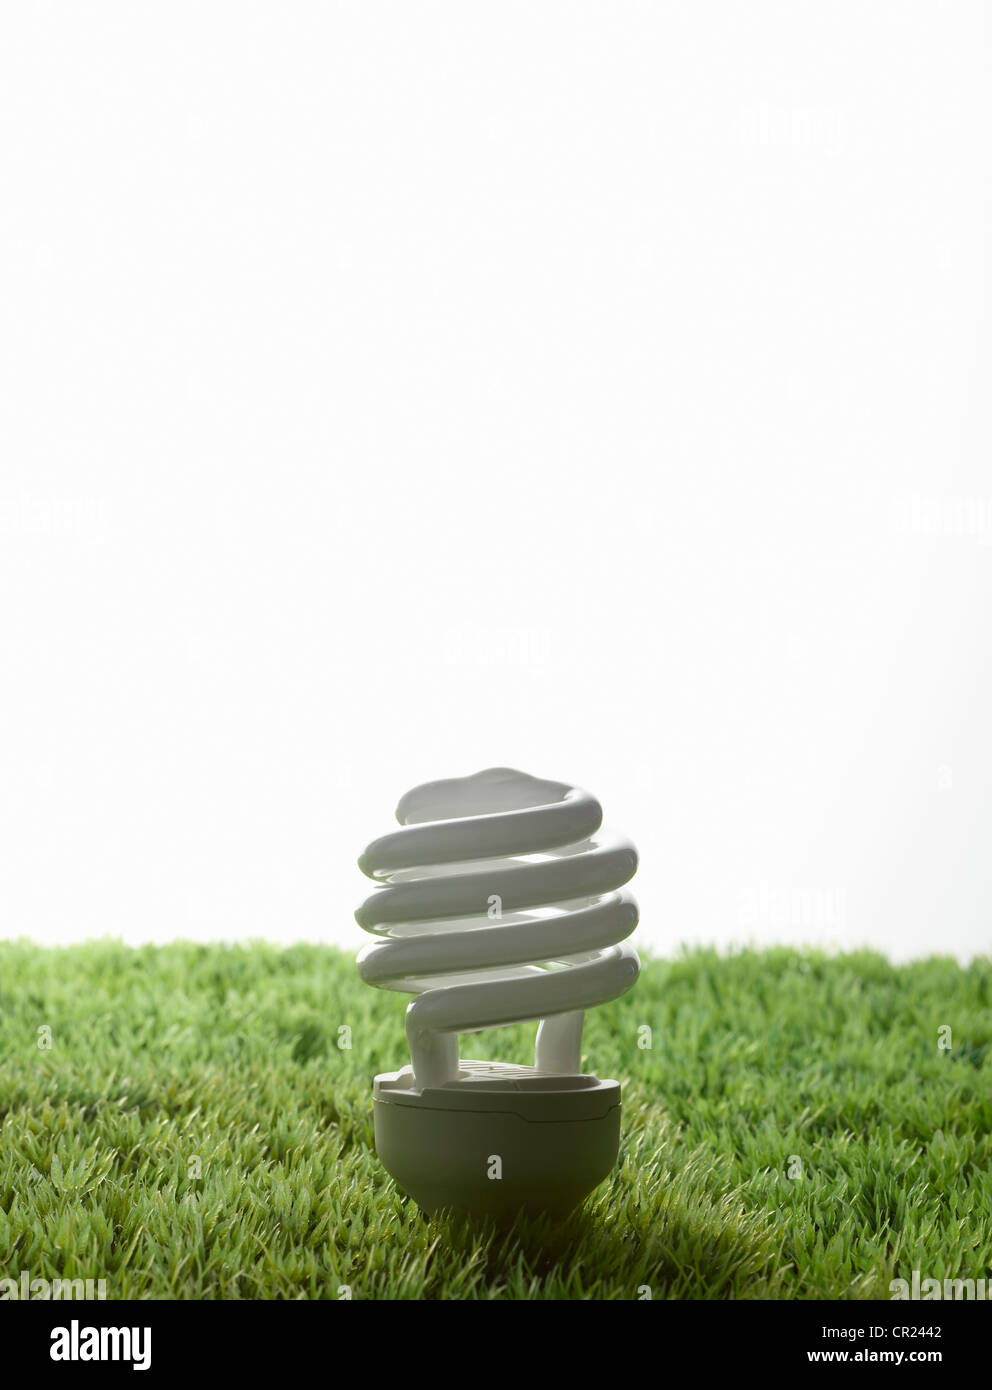 Fluorescent light bulb in grass Stock Photo